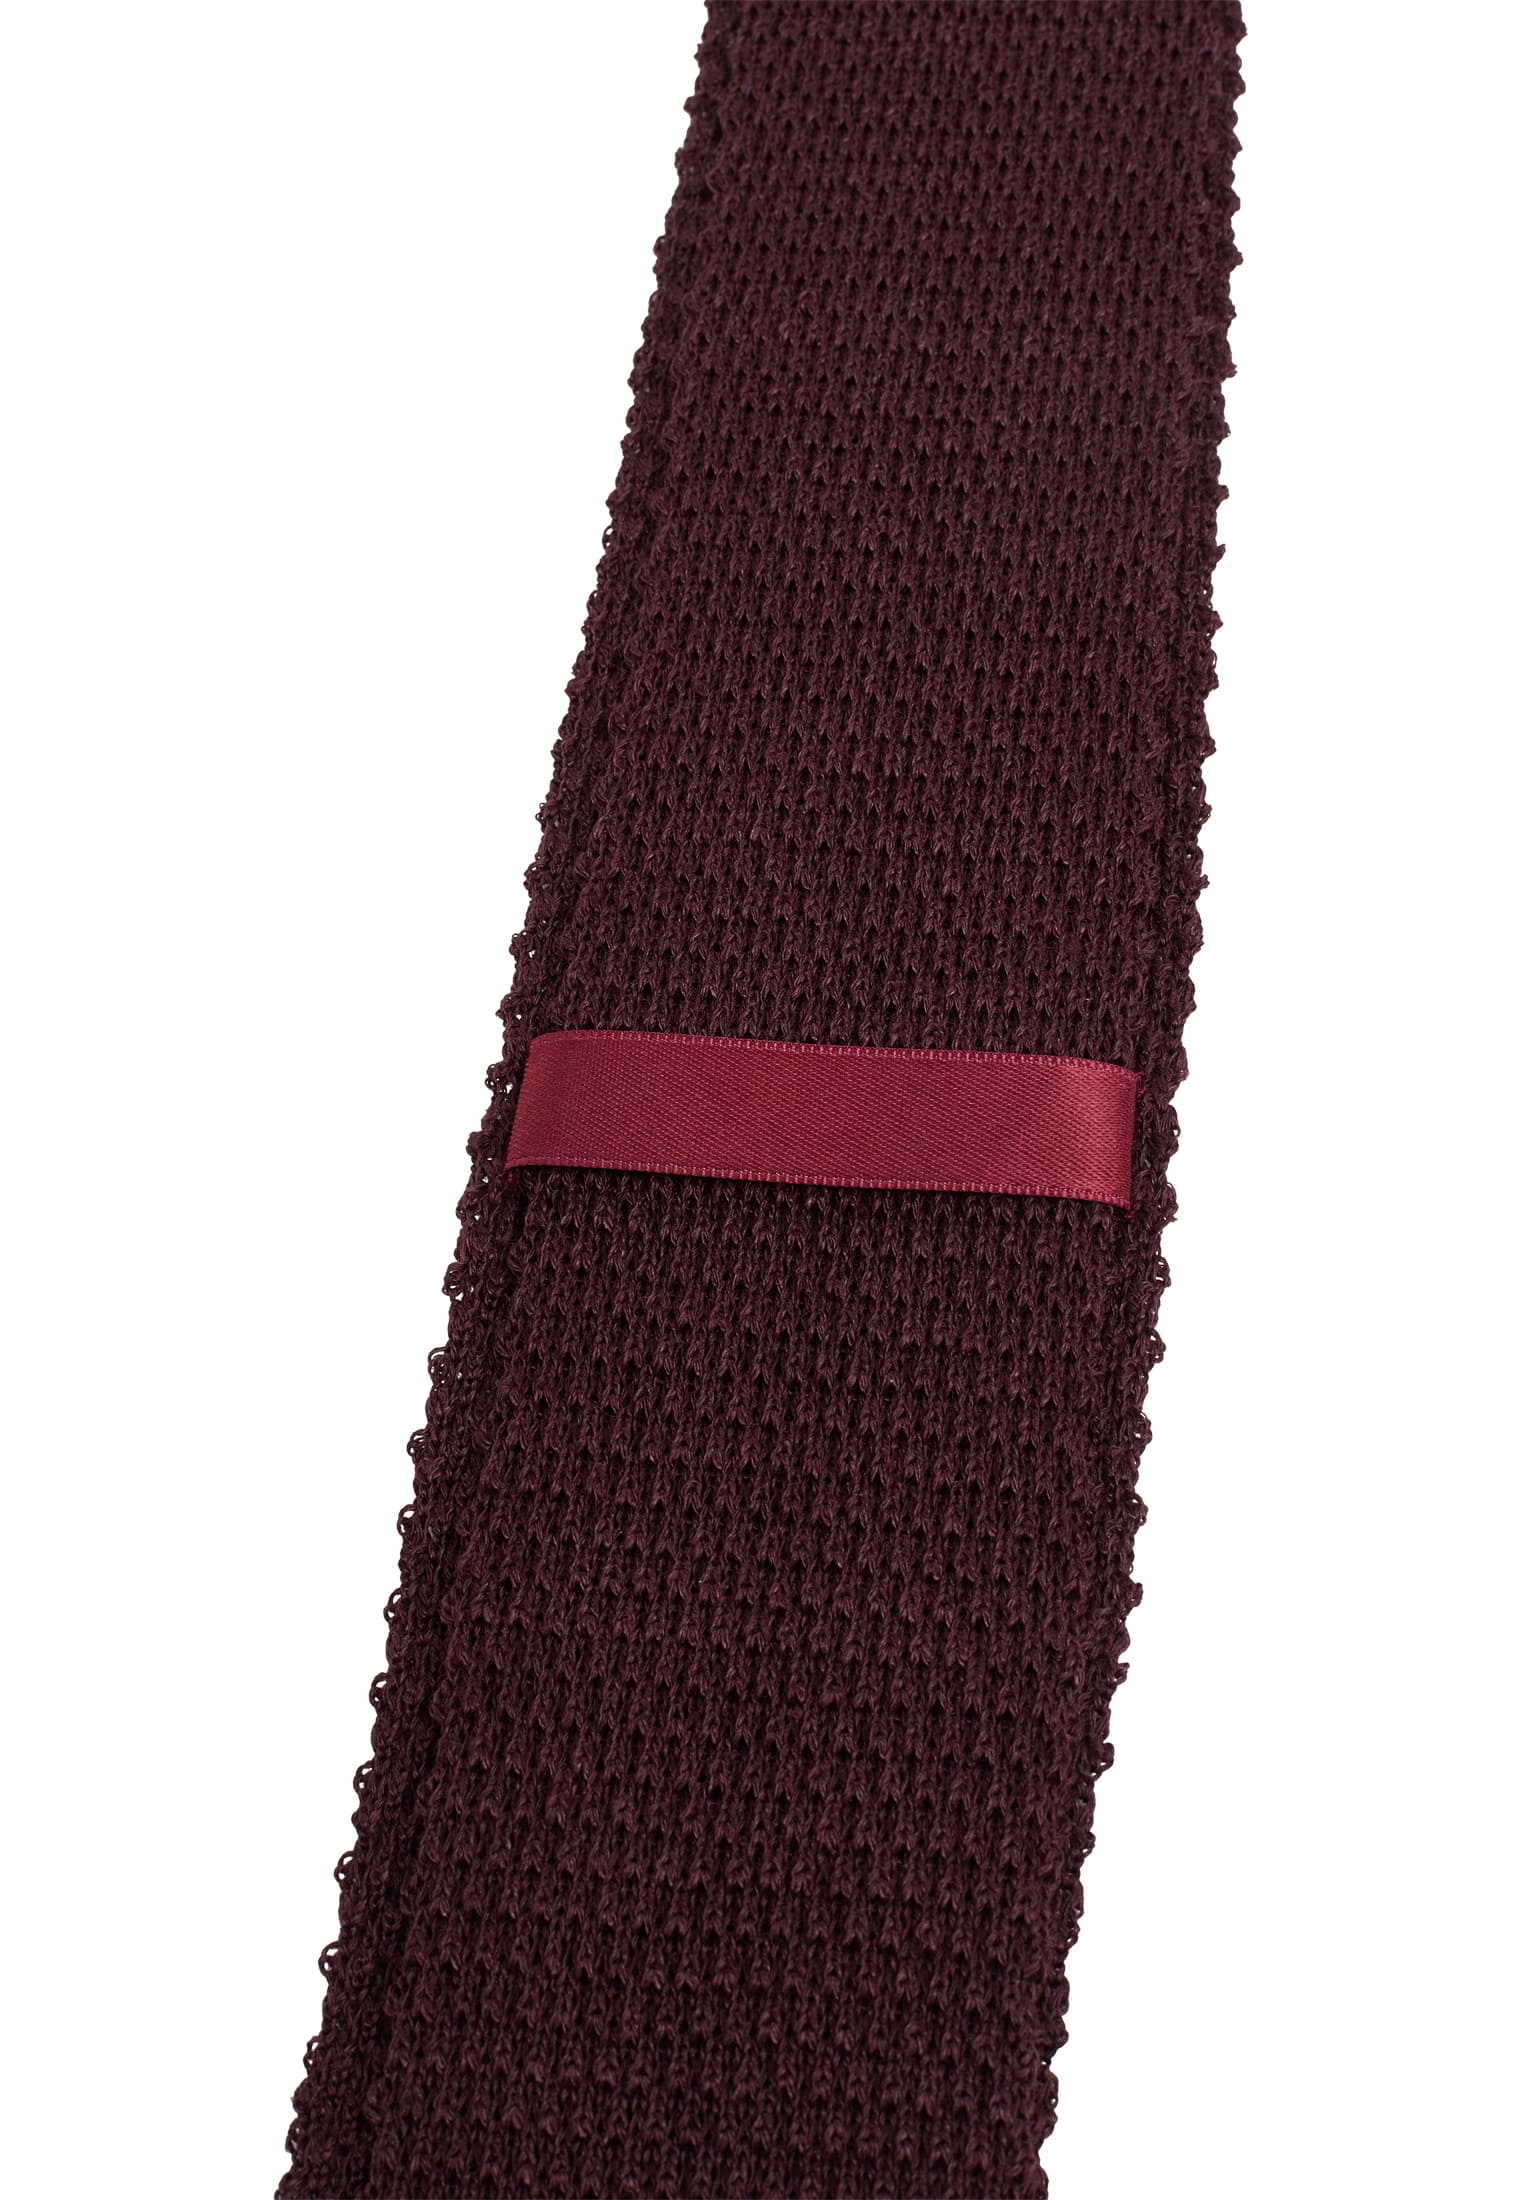 [Herausfordernde Ultra-Low-Preise!] Krawatte in berry berry | 1AC01979-05-72-142 | unifarben | 142